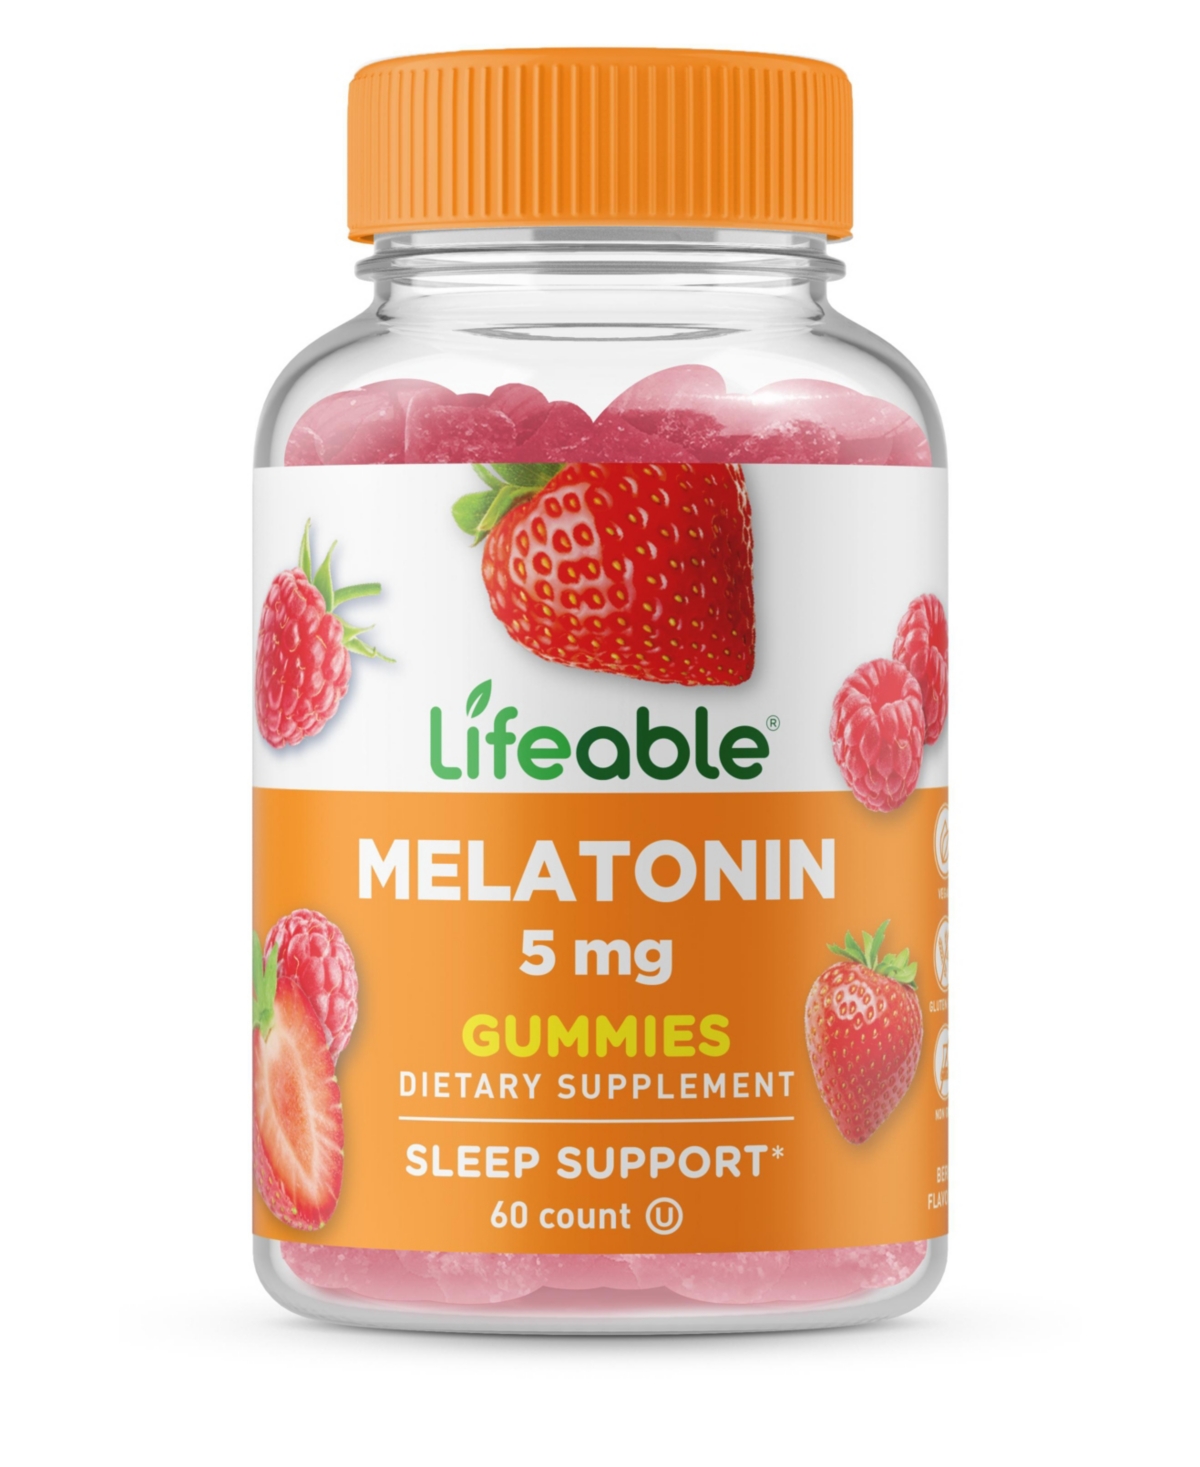 Melatonin 5 mg Gummies - Falling Asleep And Staying Asleep - Great Tasting Natural Flavor, Dietary Supplement Vitamins - 60 Gummies - Open Mi